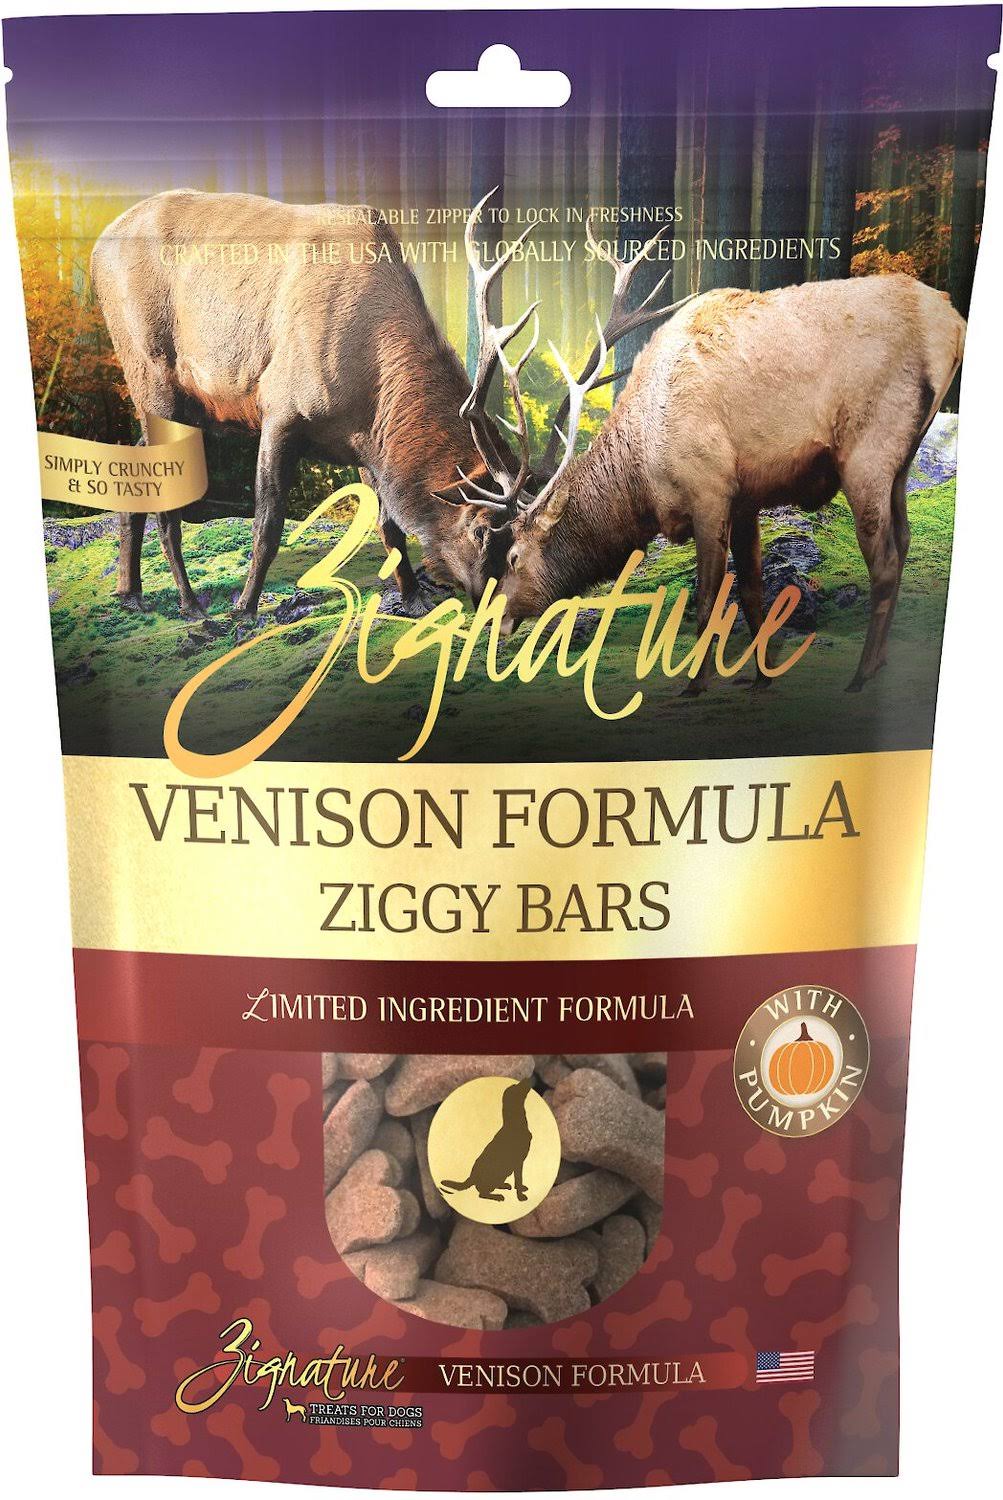 Zignature Limited Ingredient Venison Formula Ziggy Bars 12 oz